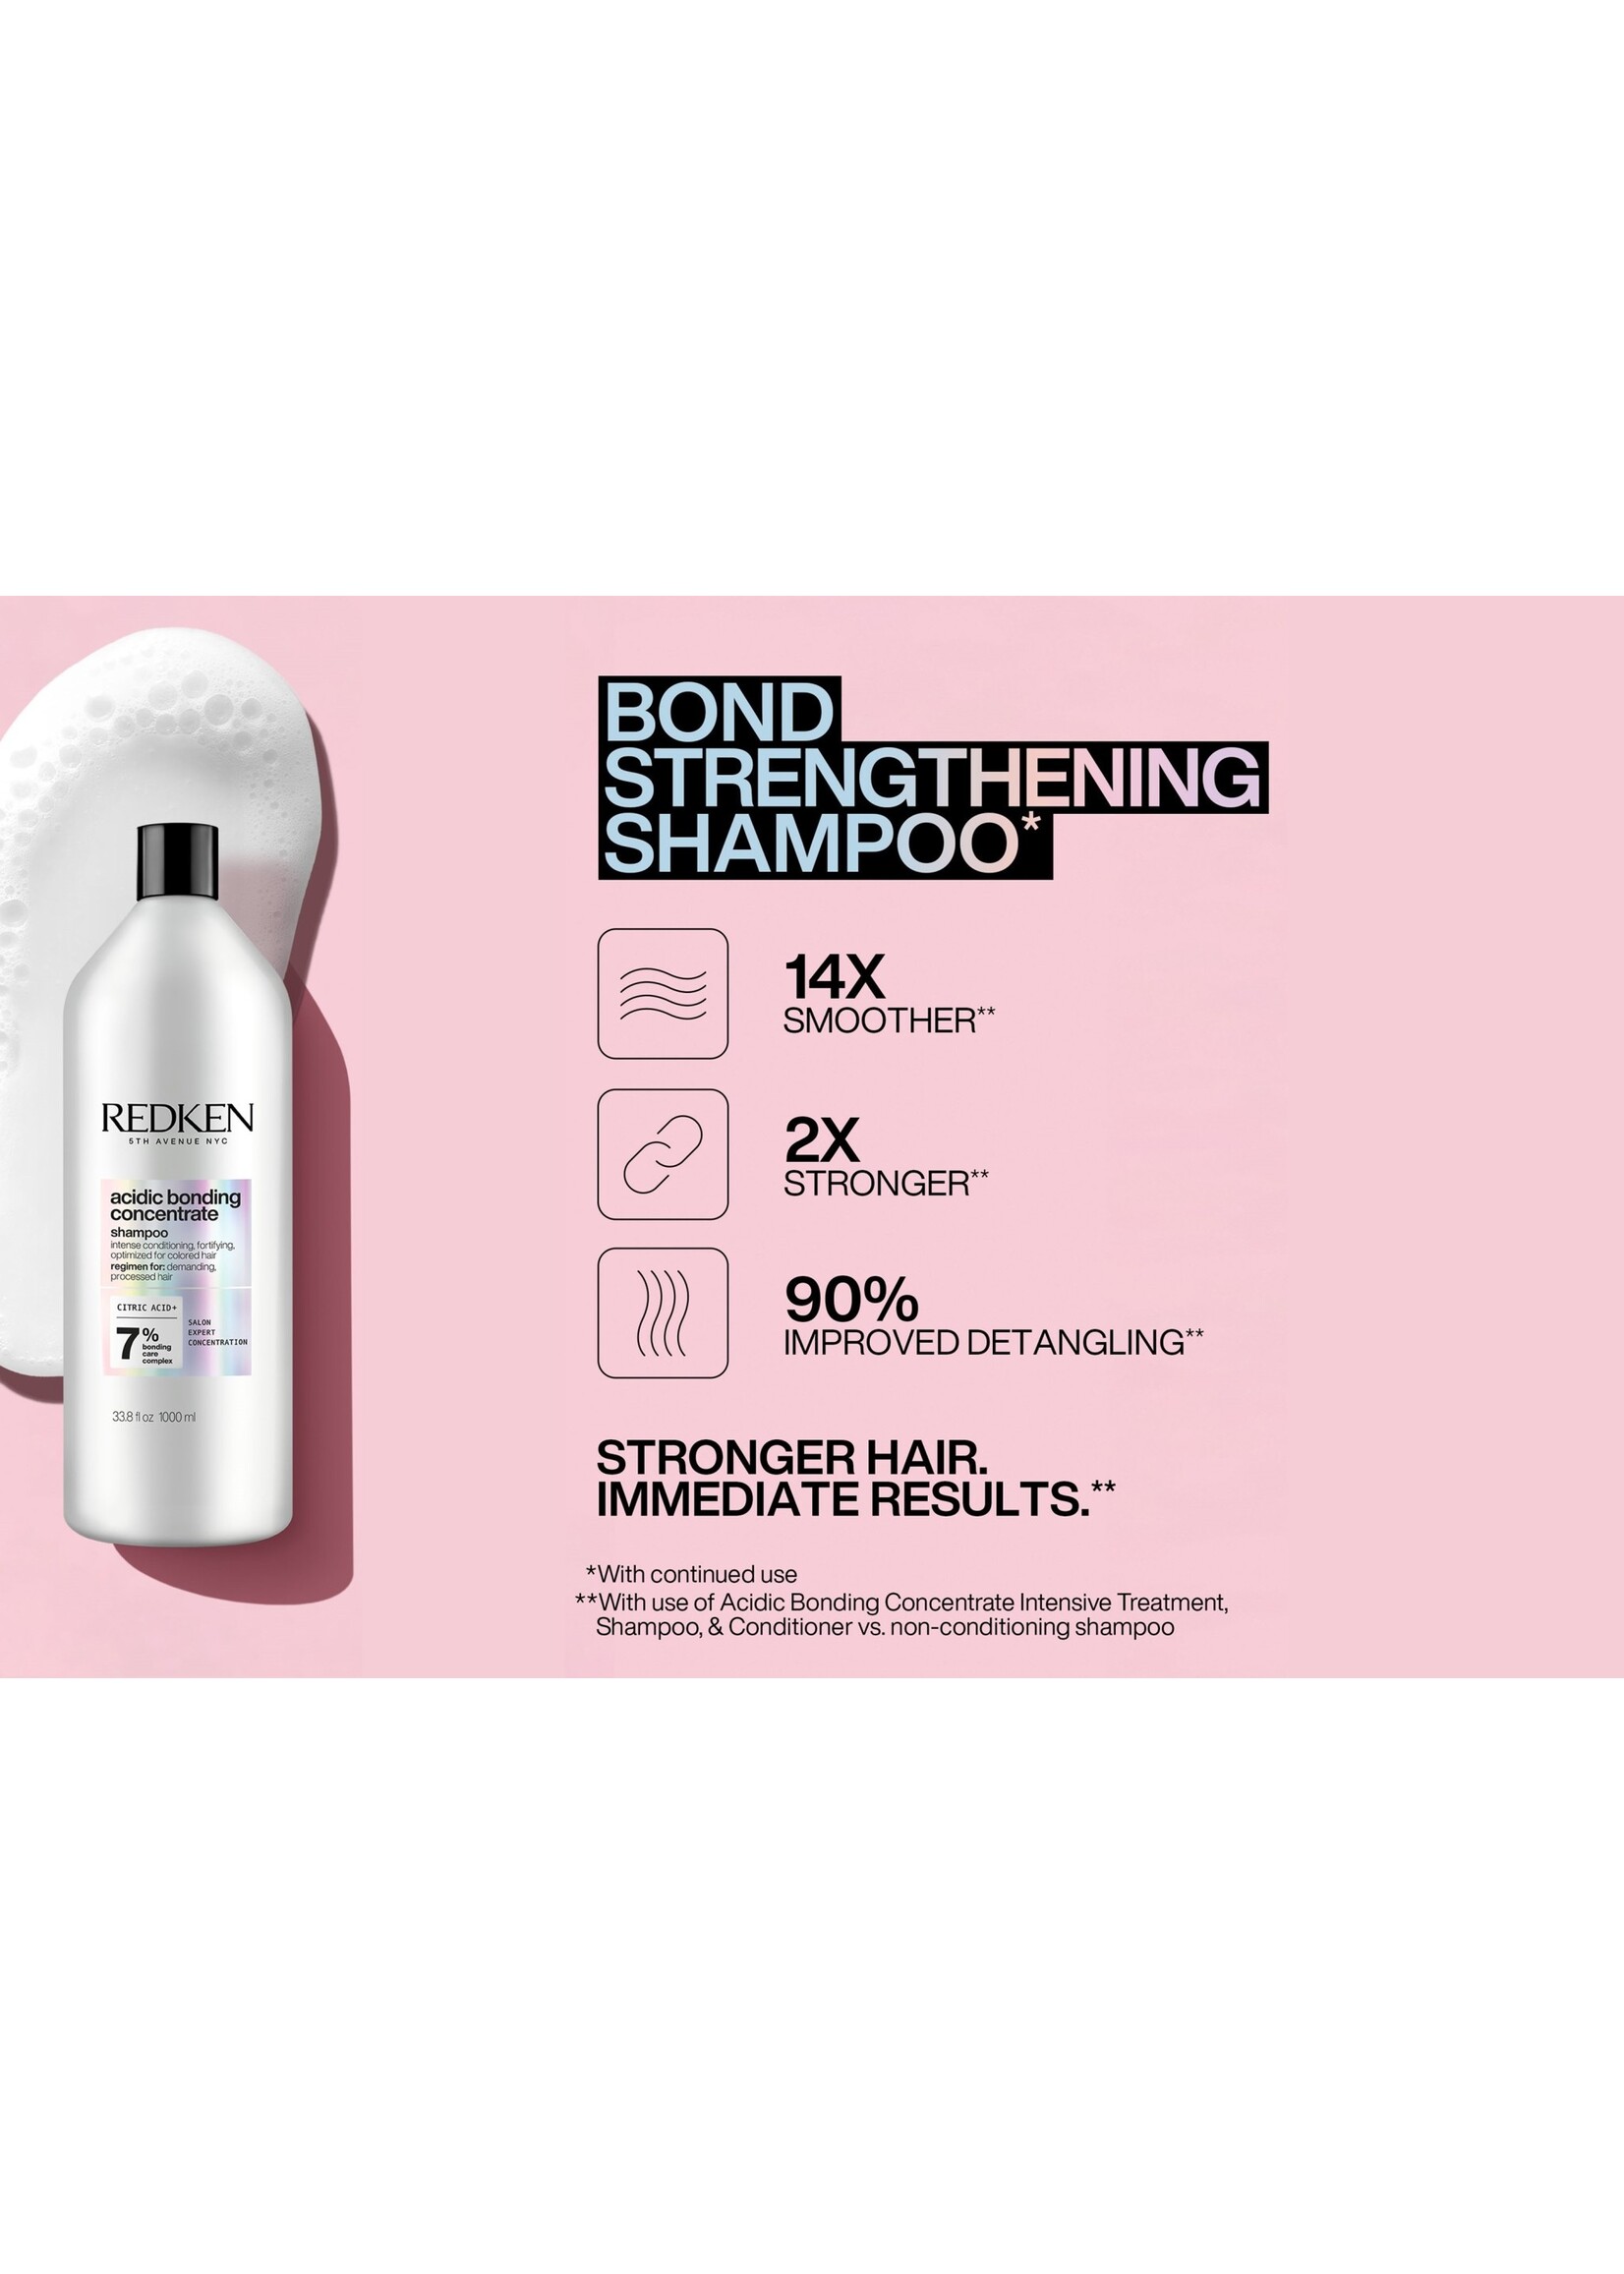 Redken Redken Acidic Bonding Concentrate Shampoo 1L